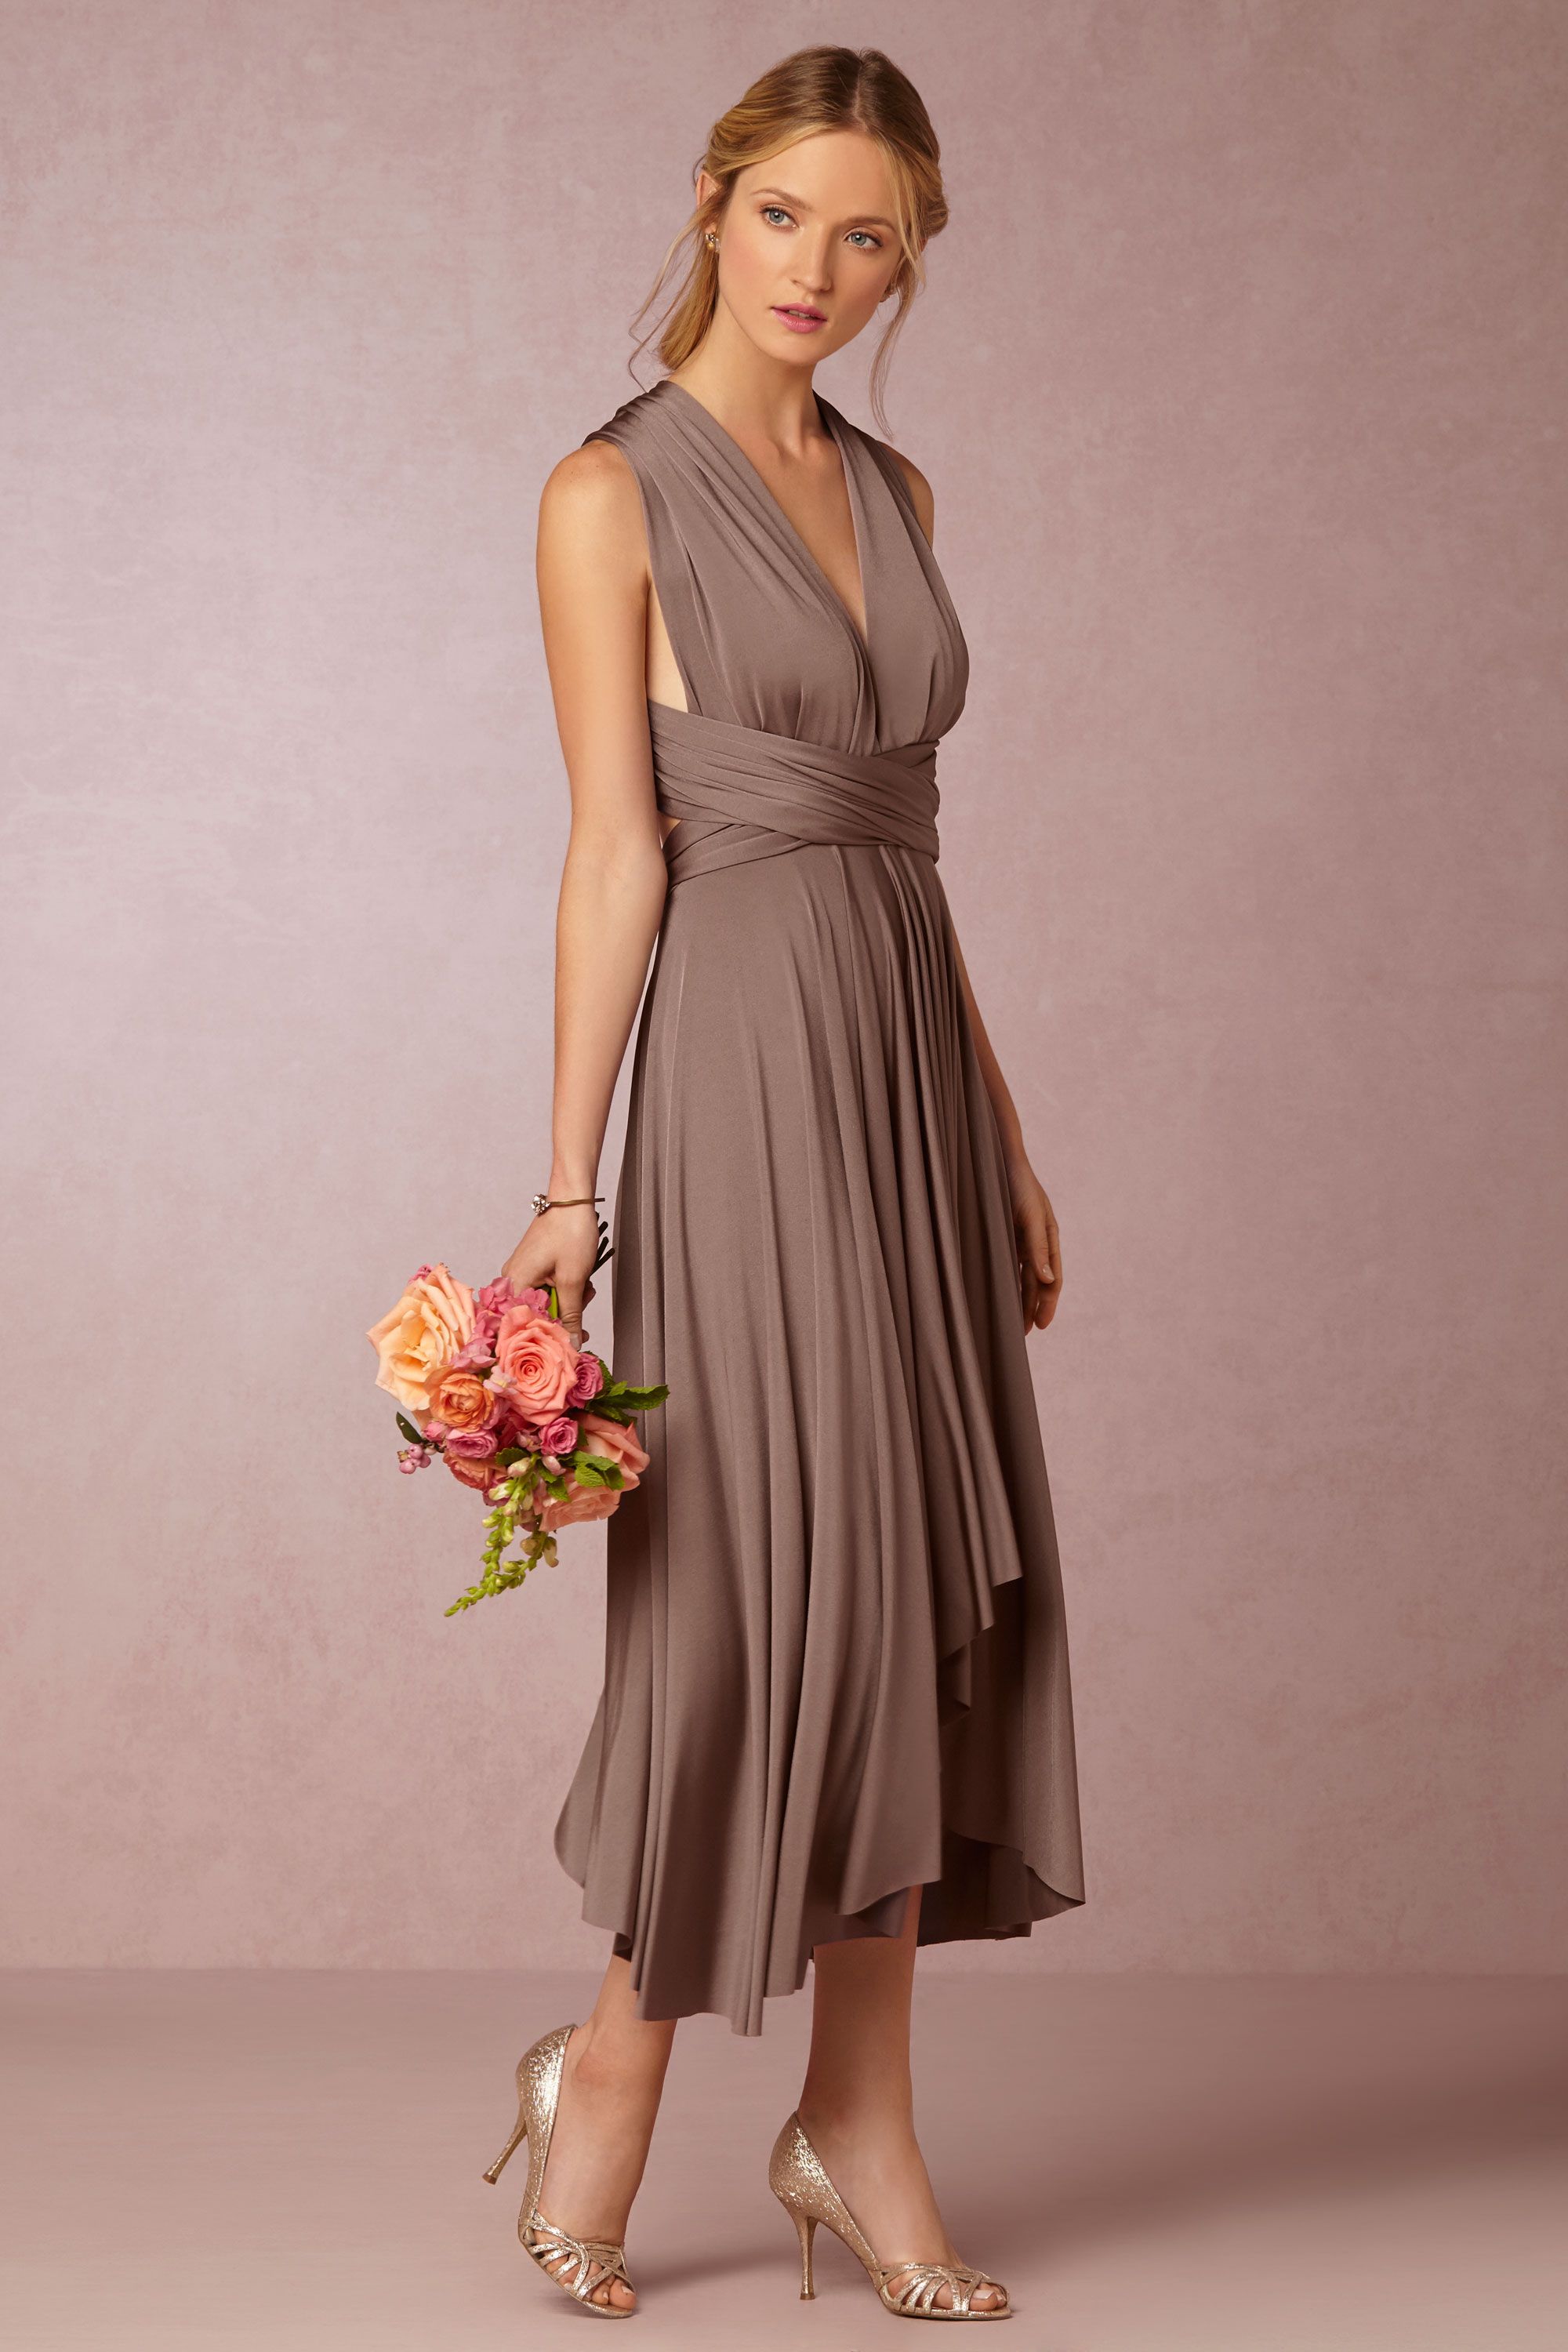 Vivian Dress in Sale Dresses | BHLDN